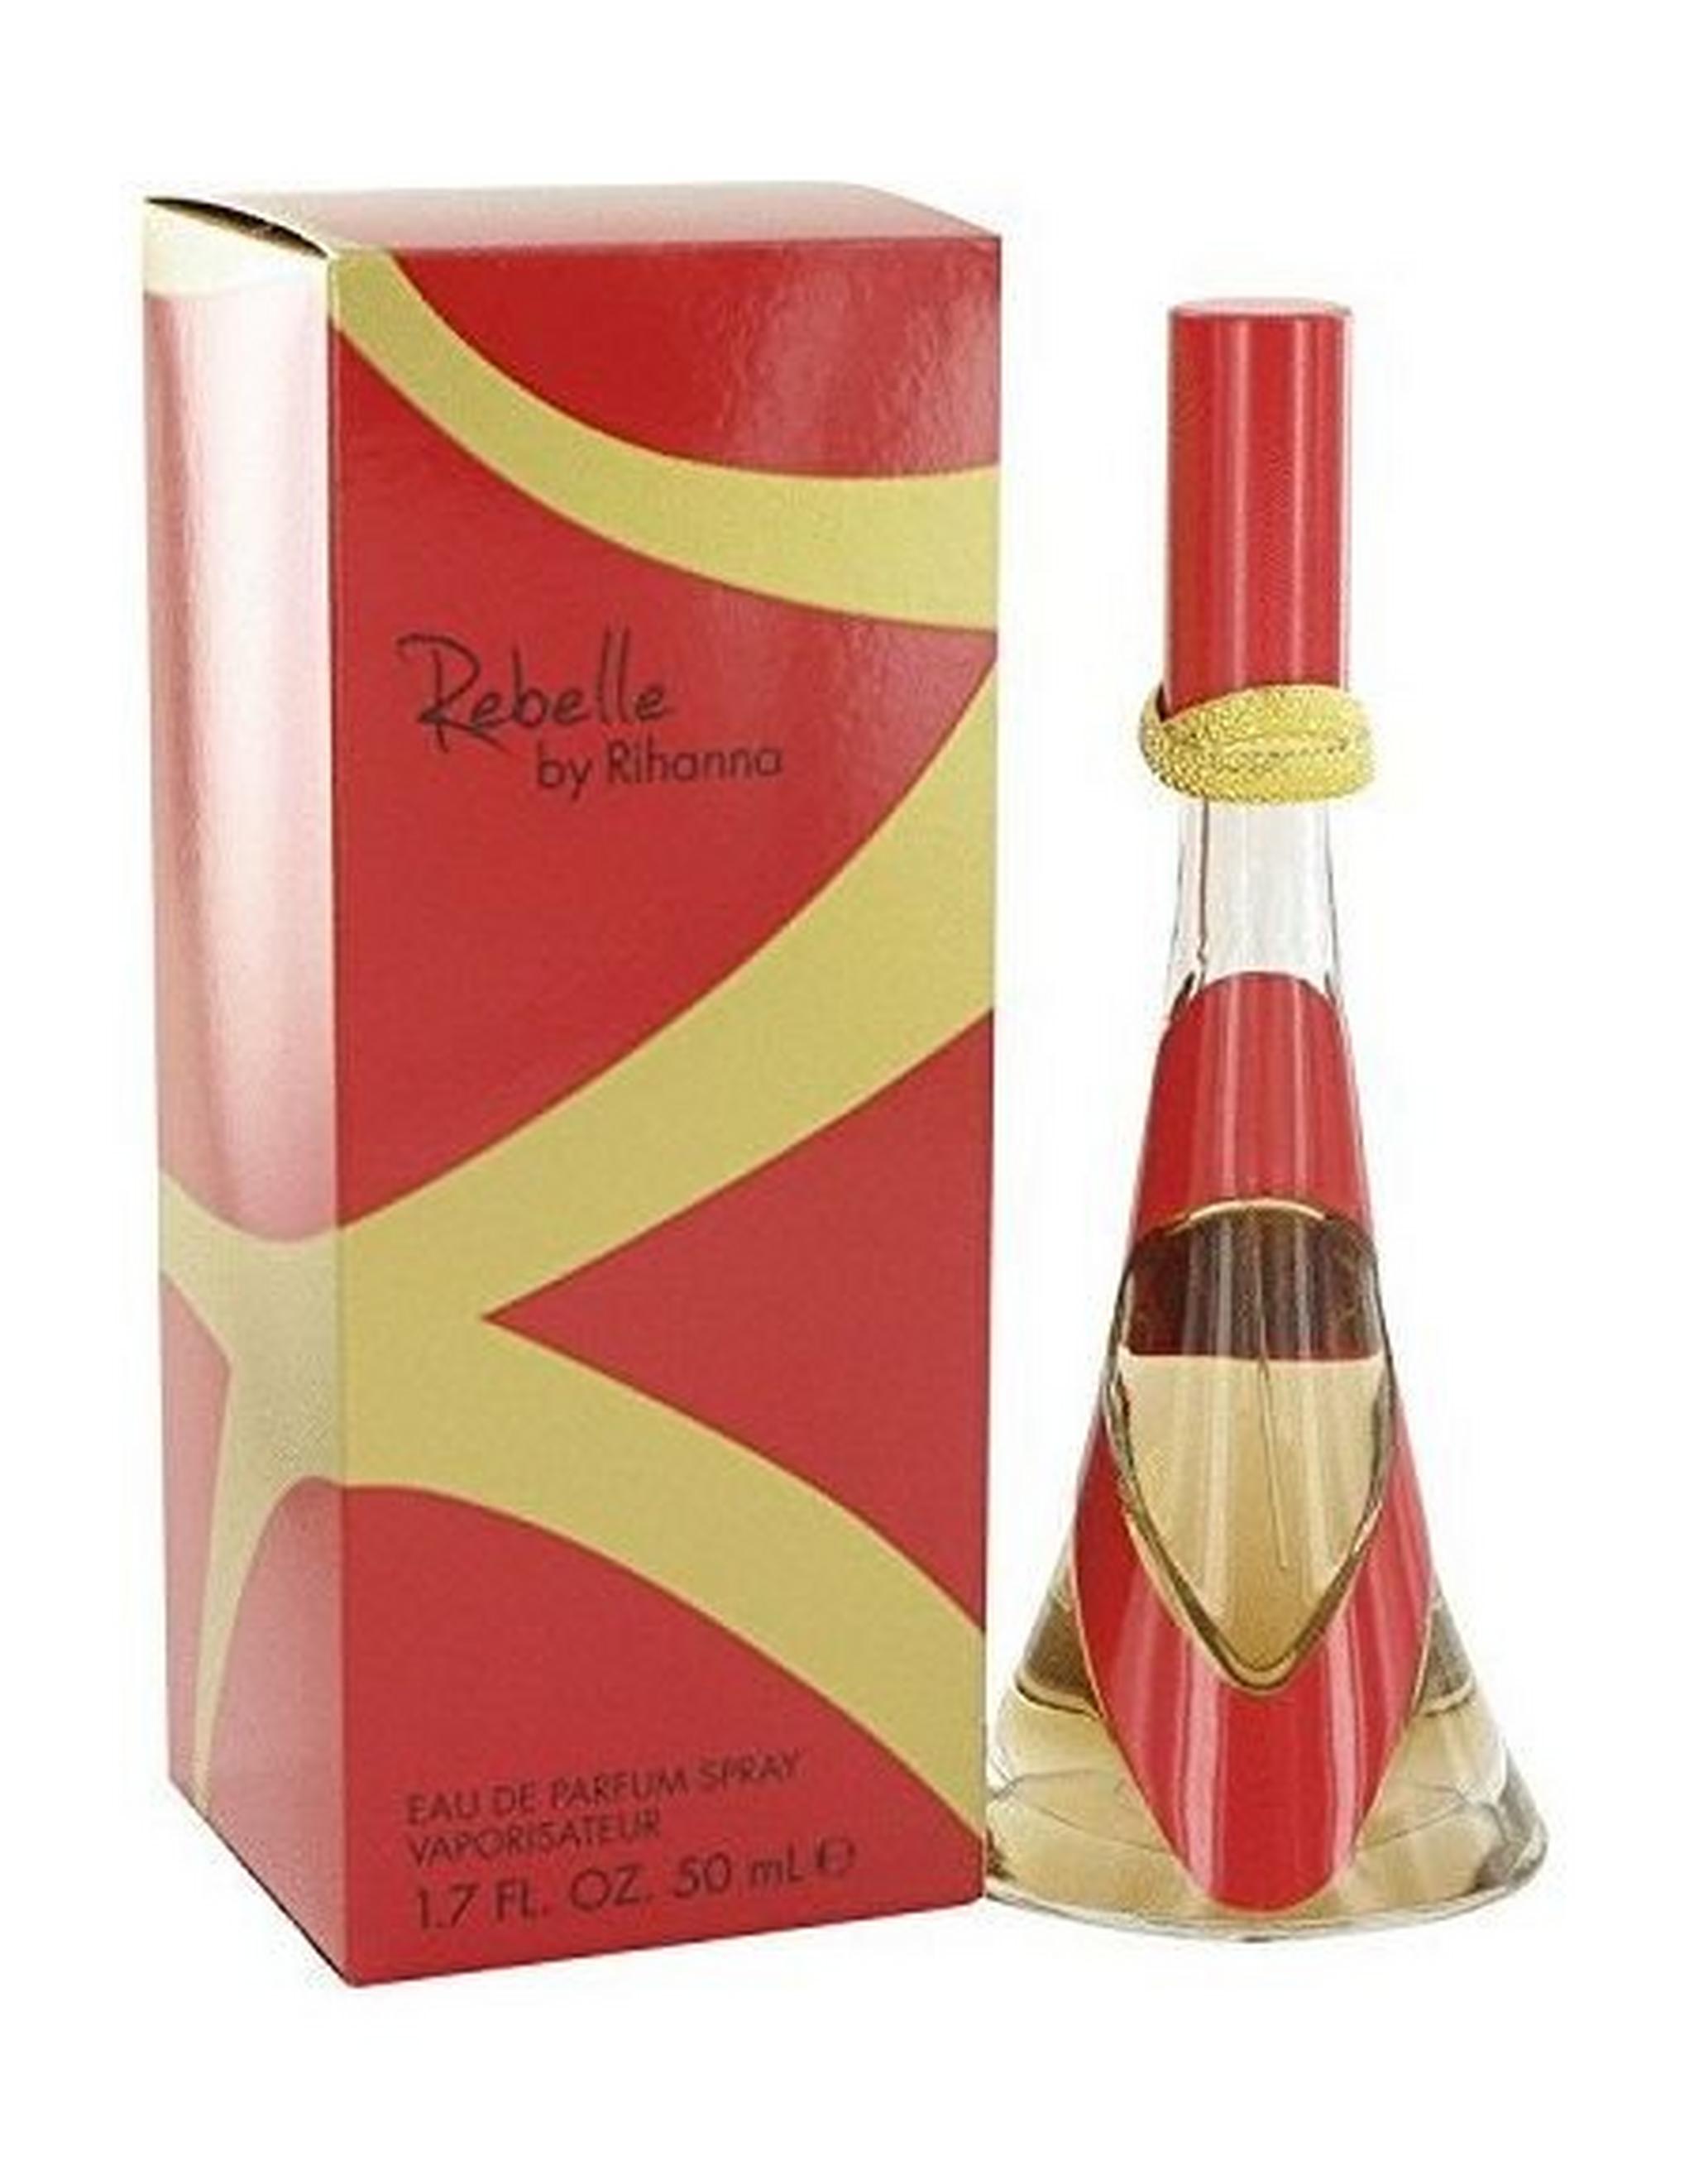 Rebelle by Rihanna 50ml For Women Eau de Parfum